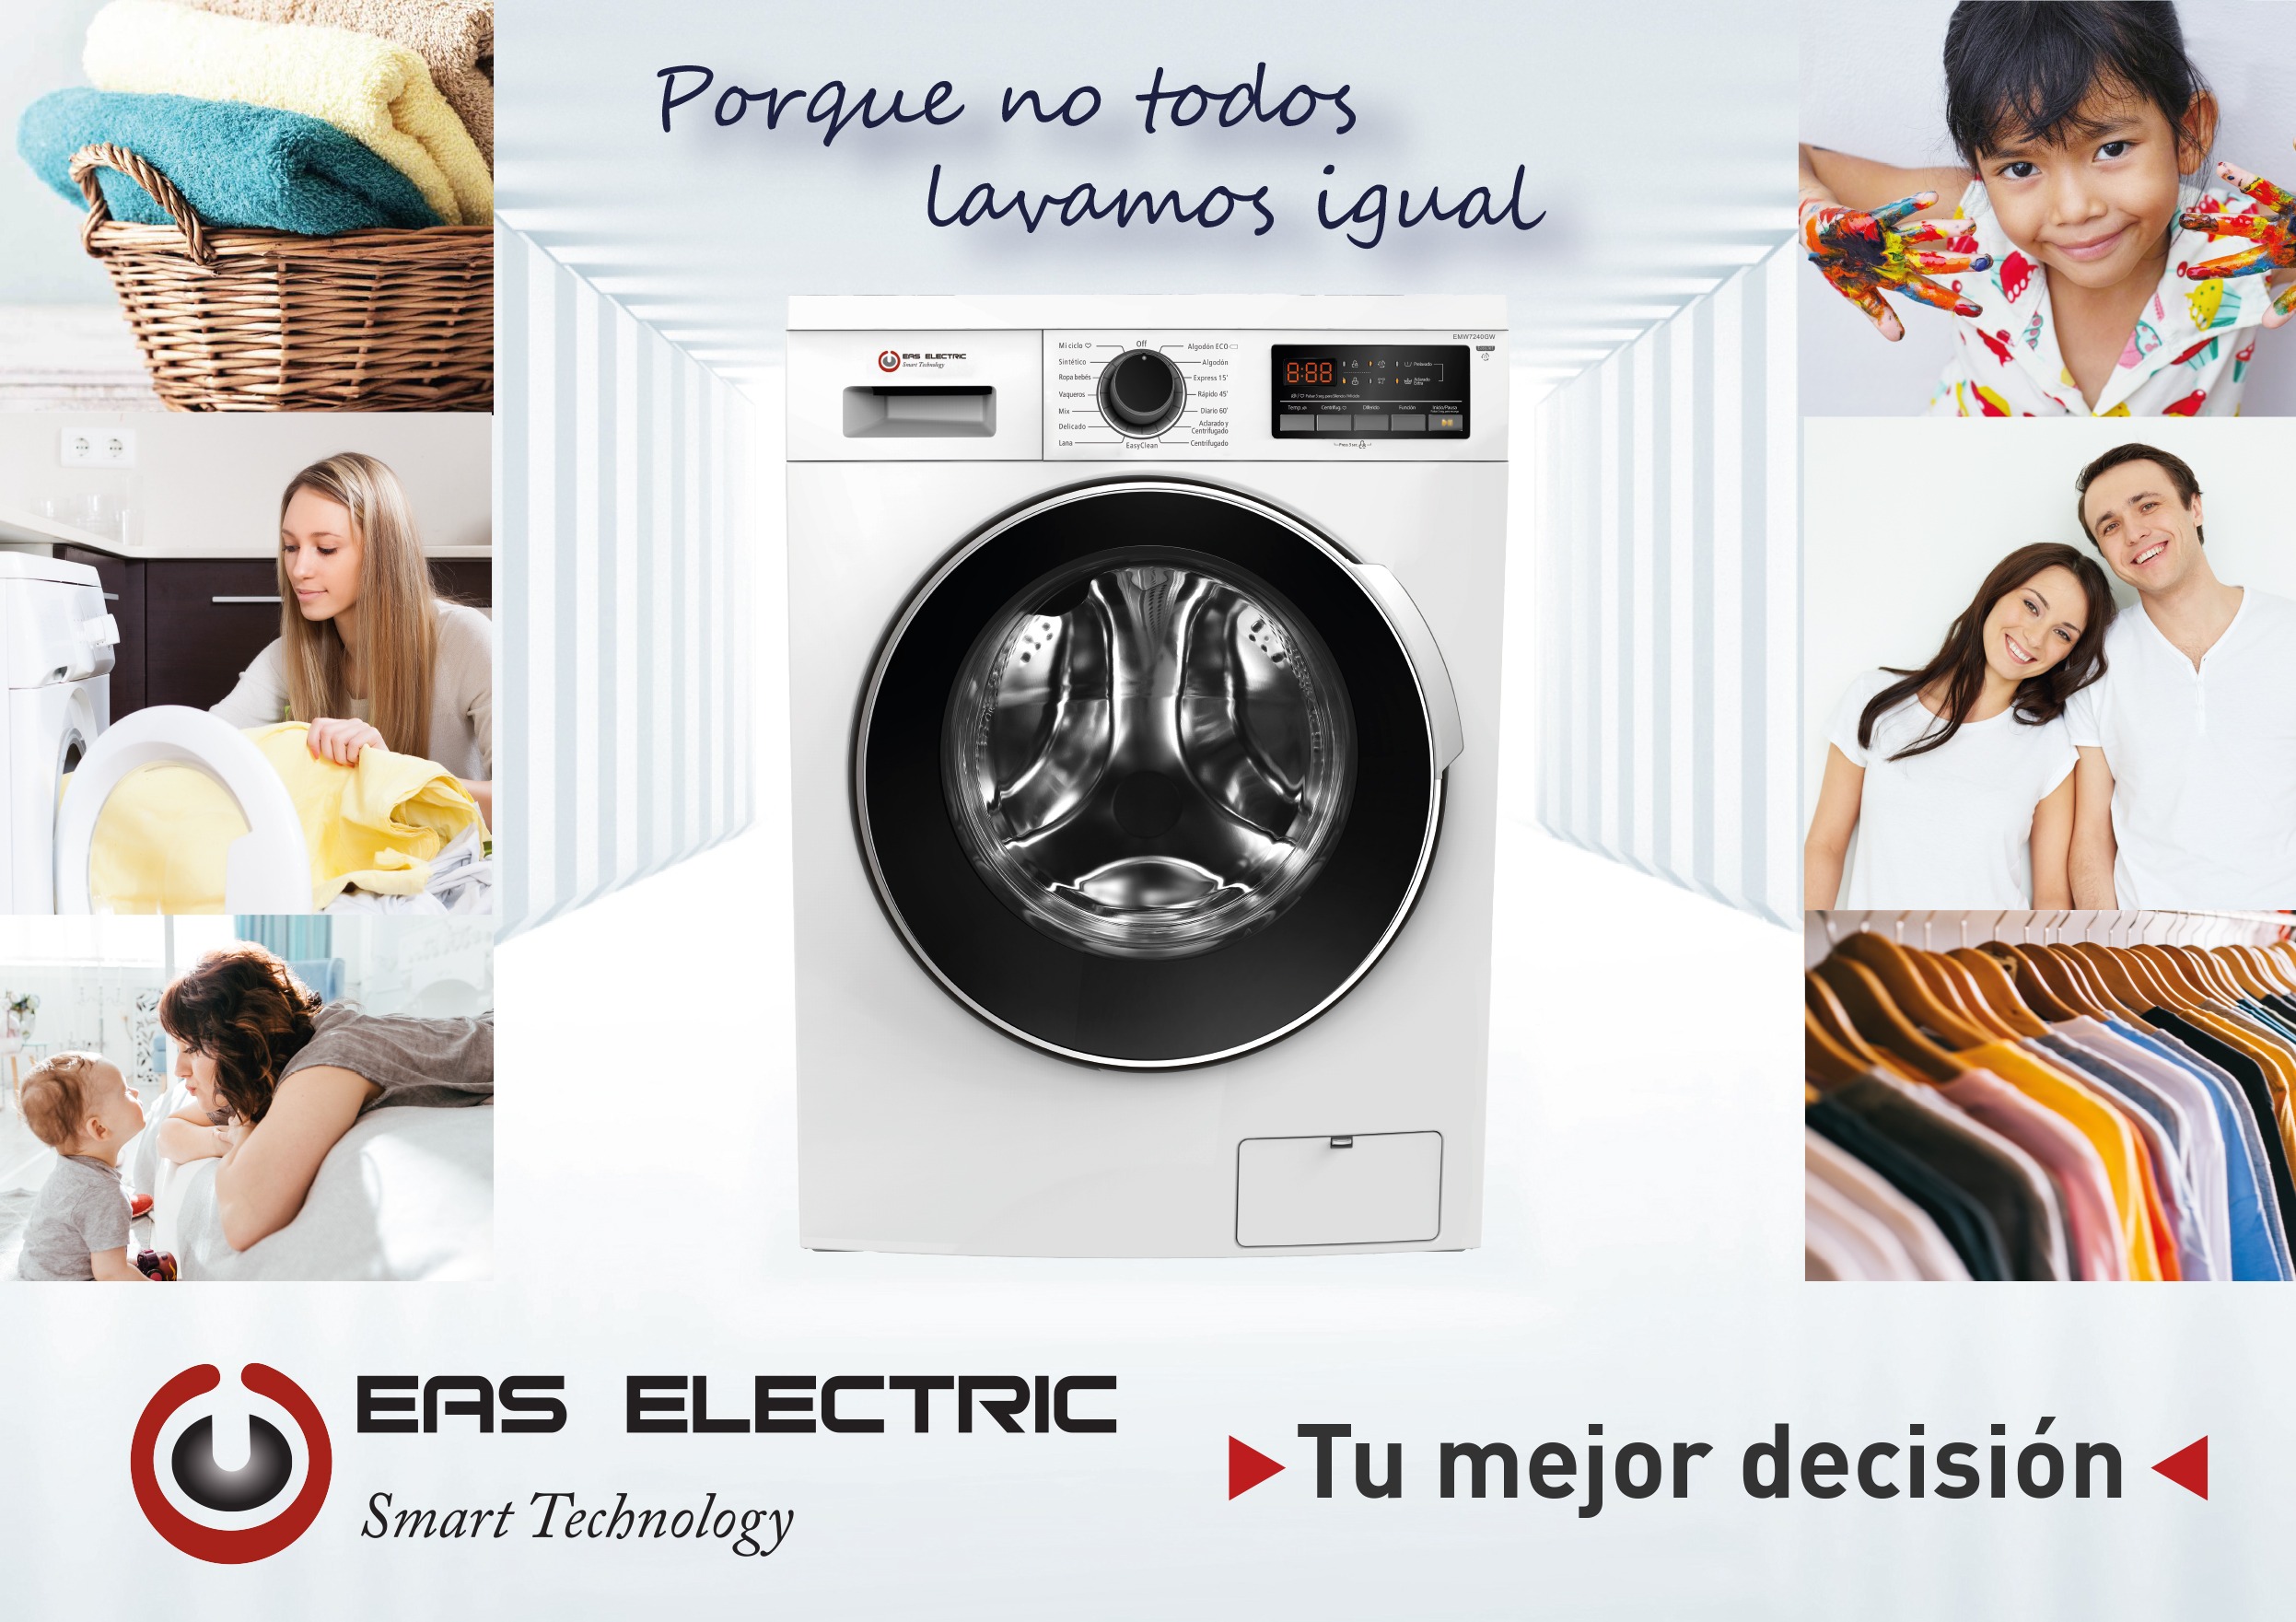 Cliente Punto Dislocación Nueva gama de lavadoras Eas Electric - EAS Electric